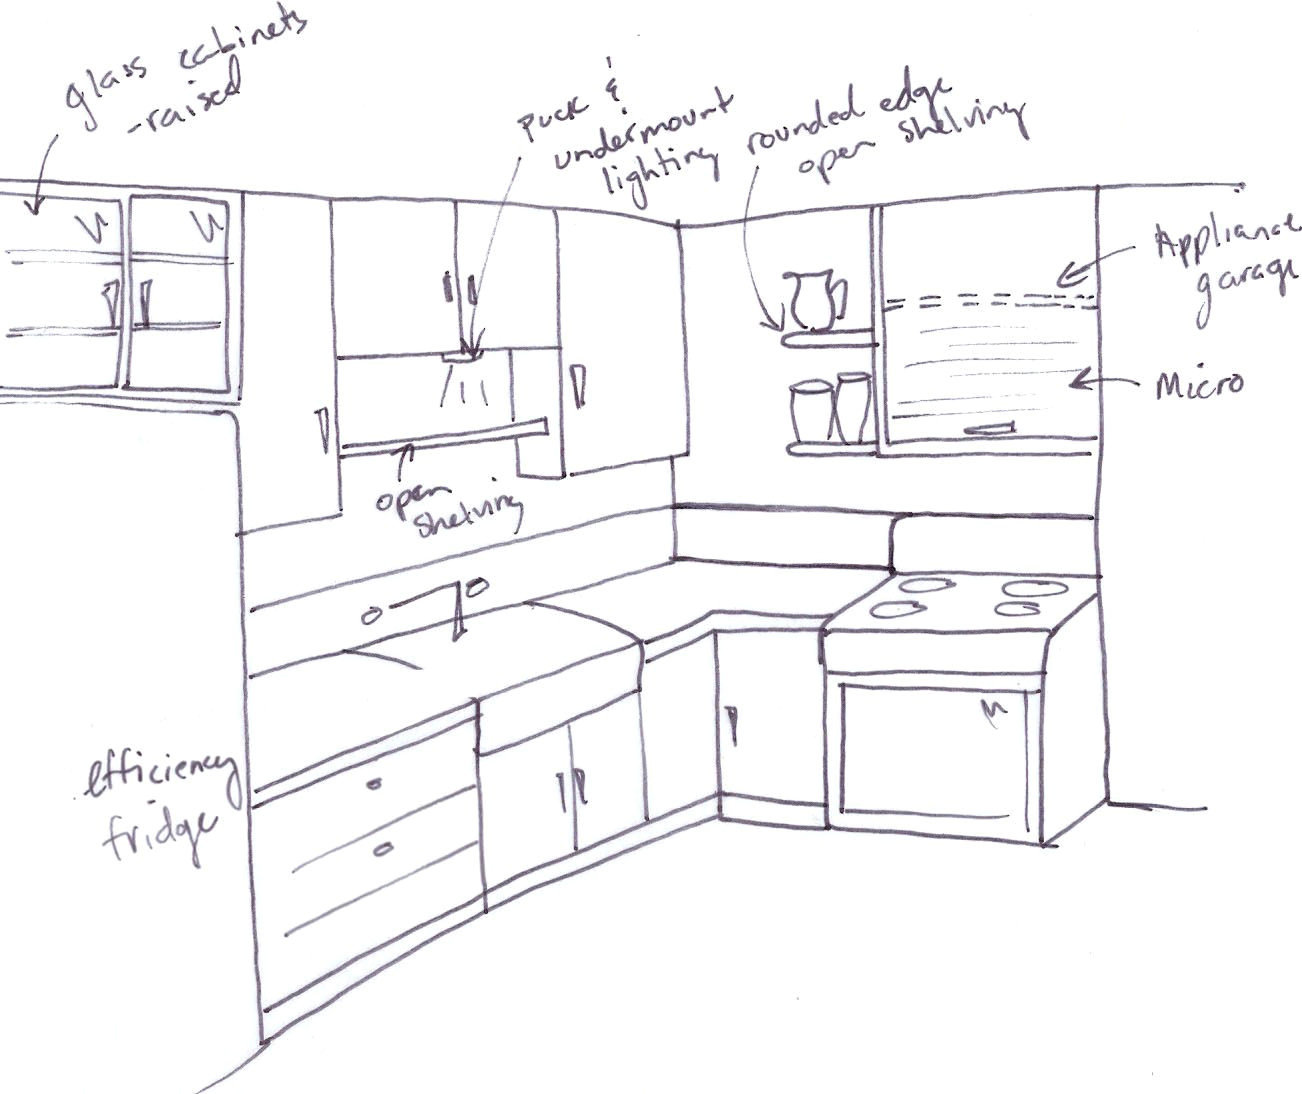 concept layout rough sketch kitchen